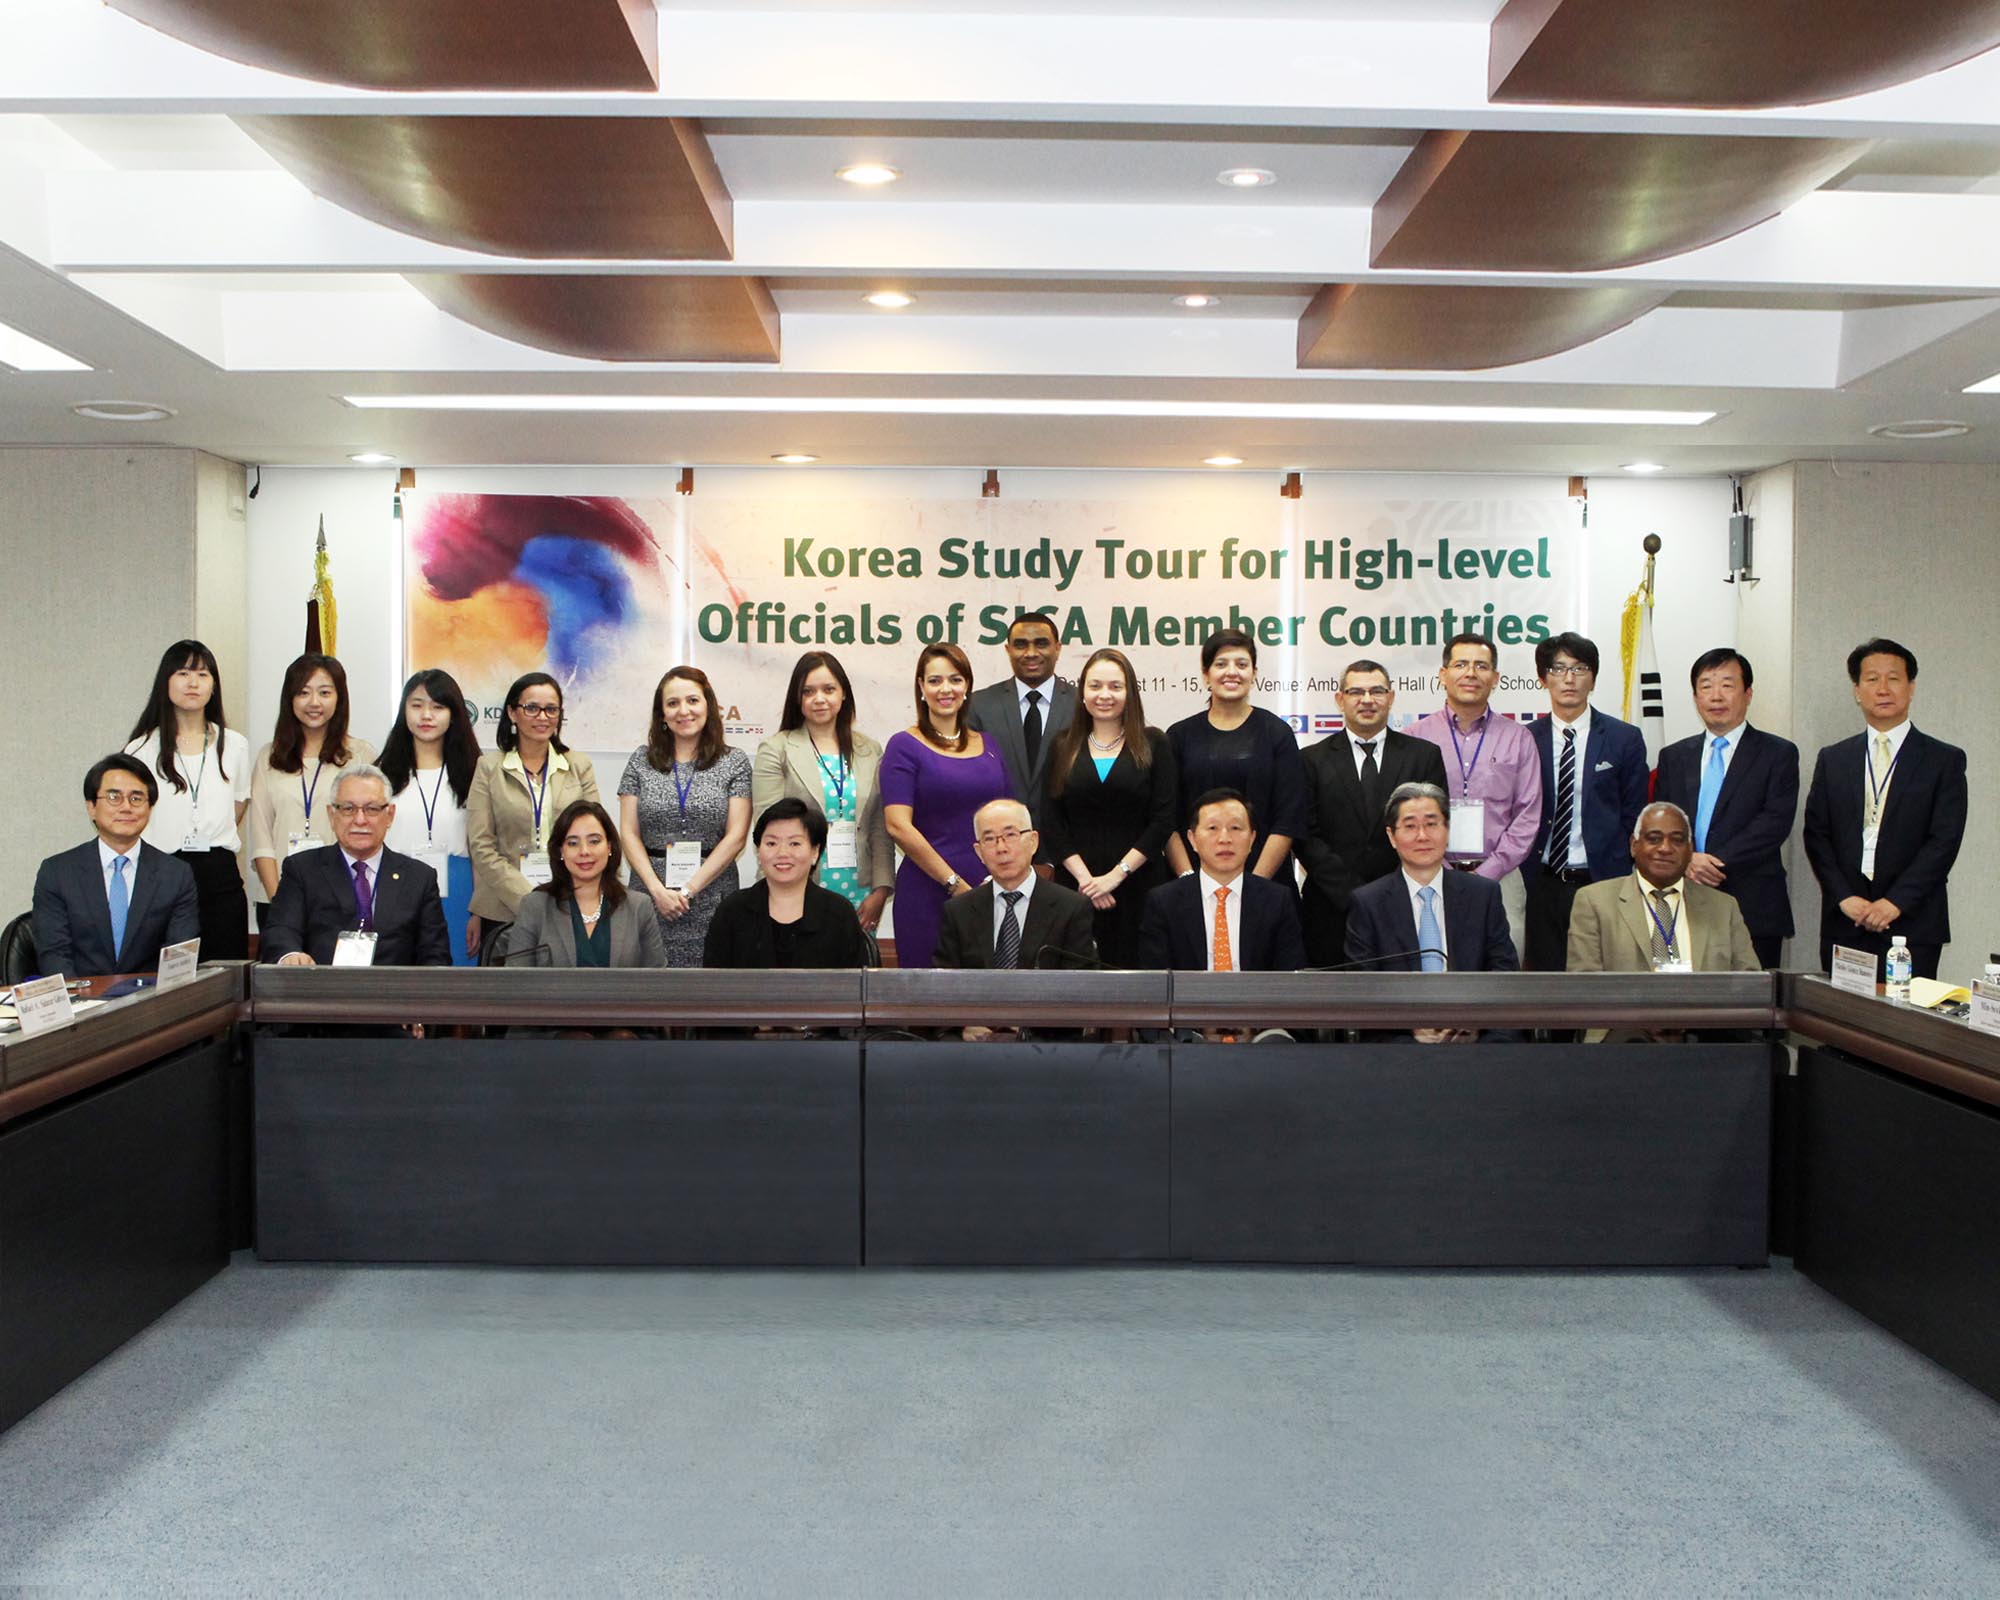 Korea Study Tour for High-level Officials of SICA Member Countries